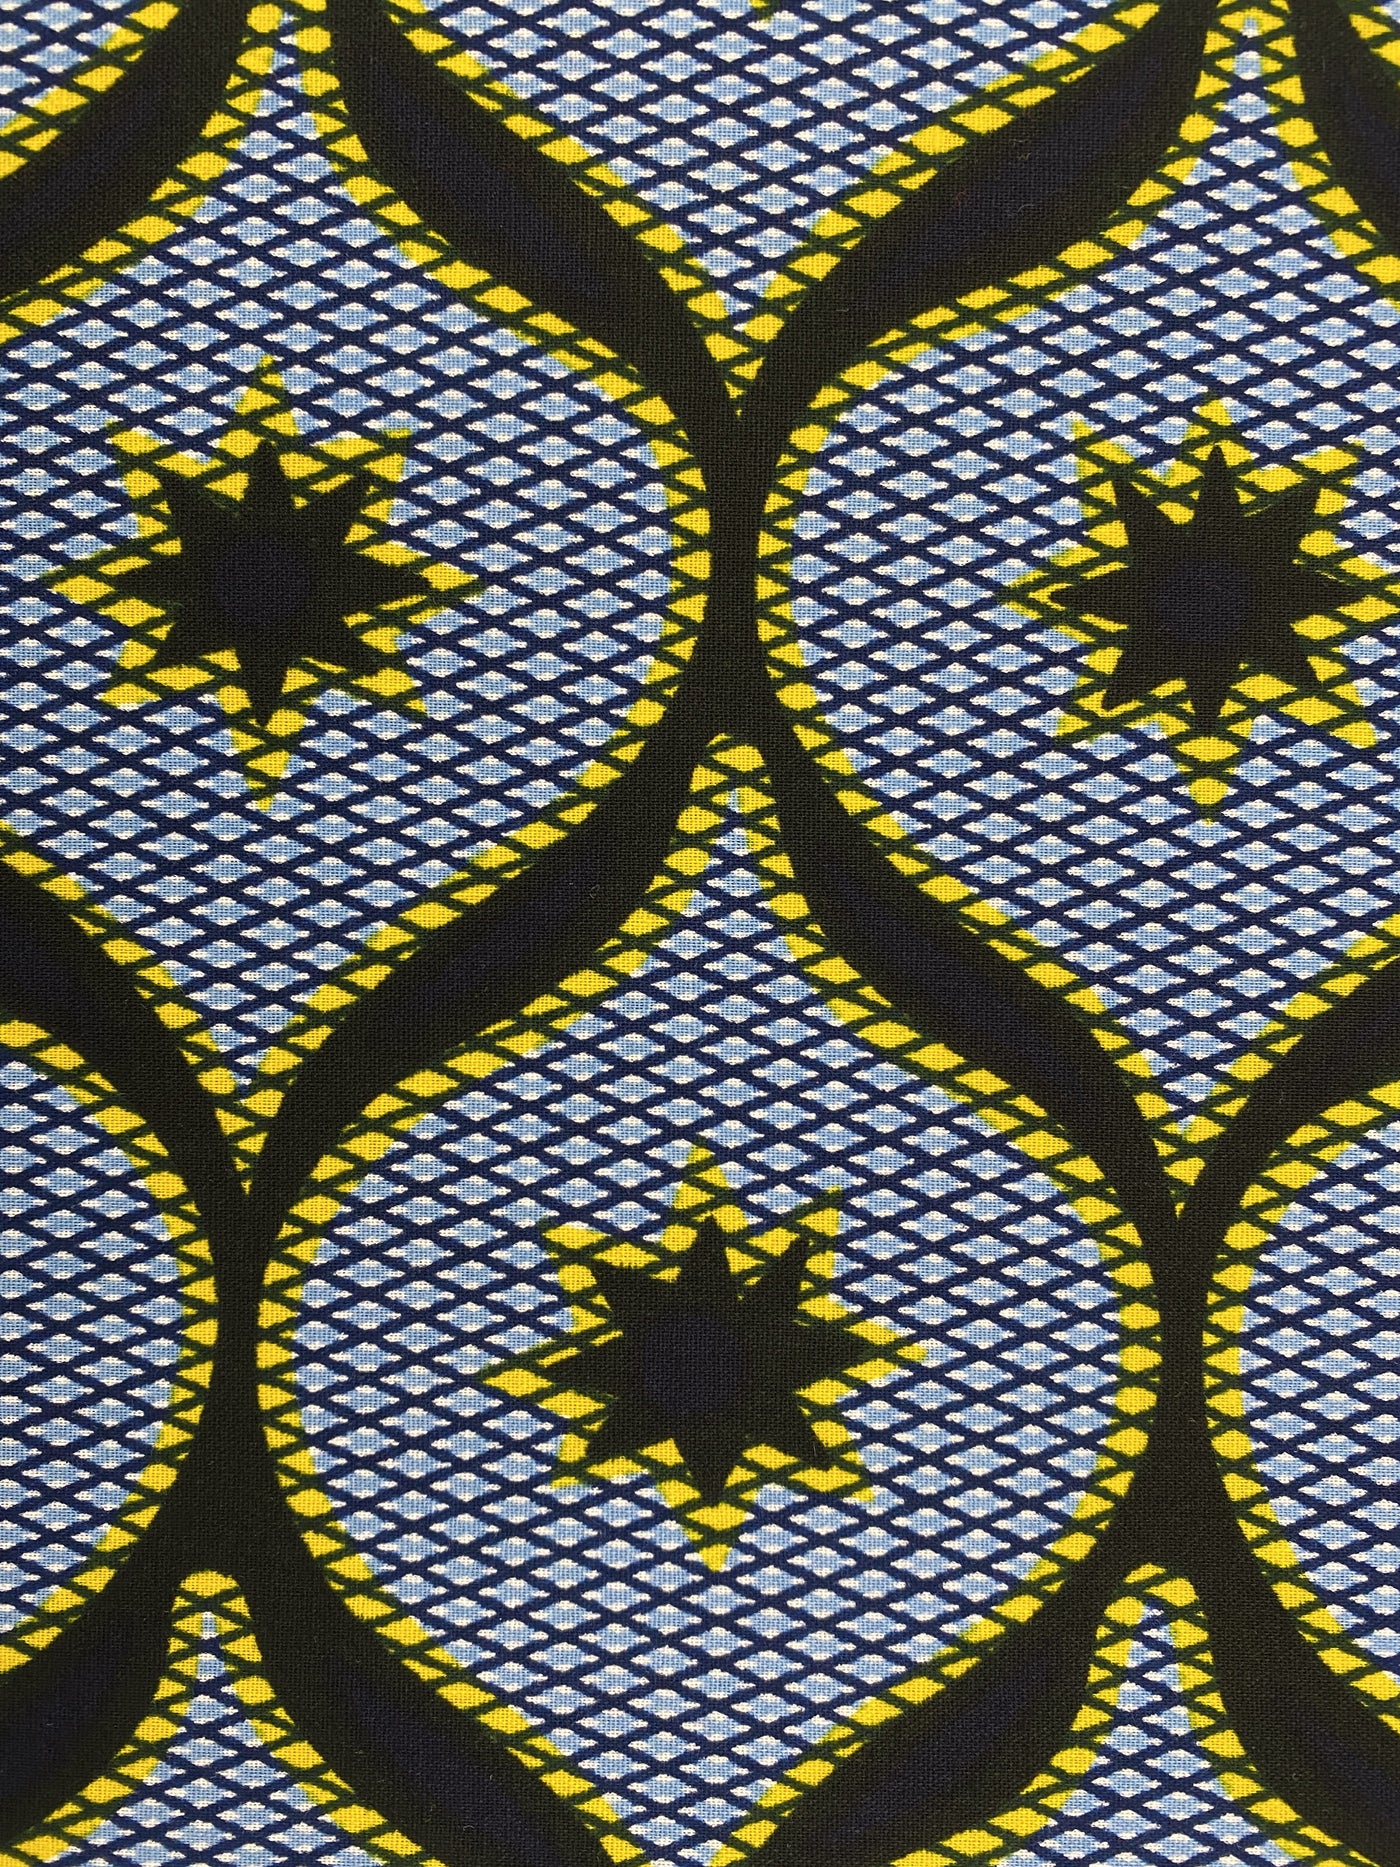 Ankara Fabric - 53116